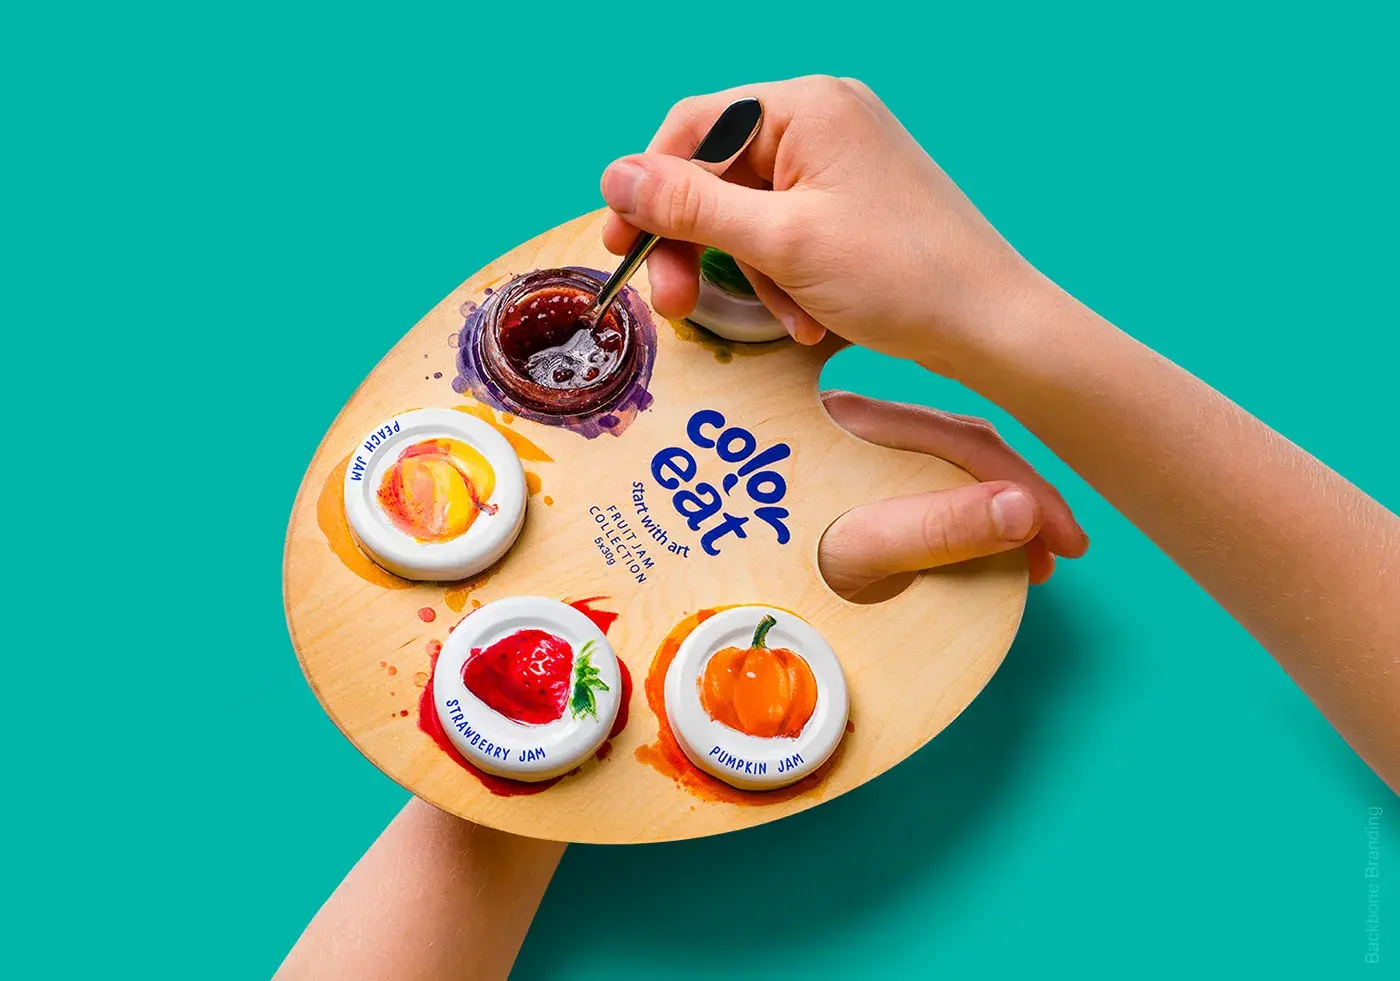 Blogduwebdesign inspiration packagings originaux innovants color eat